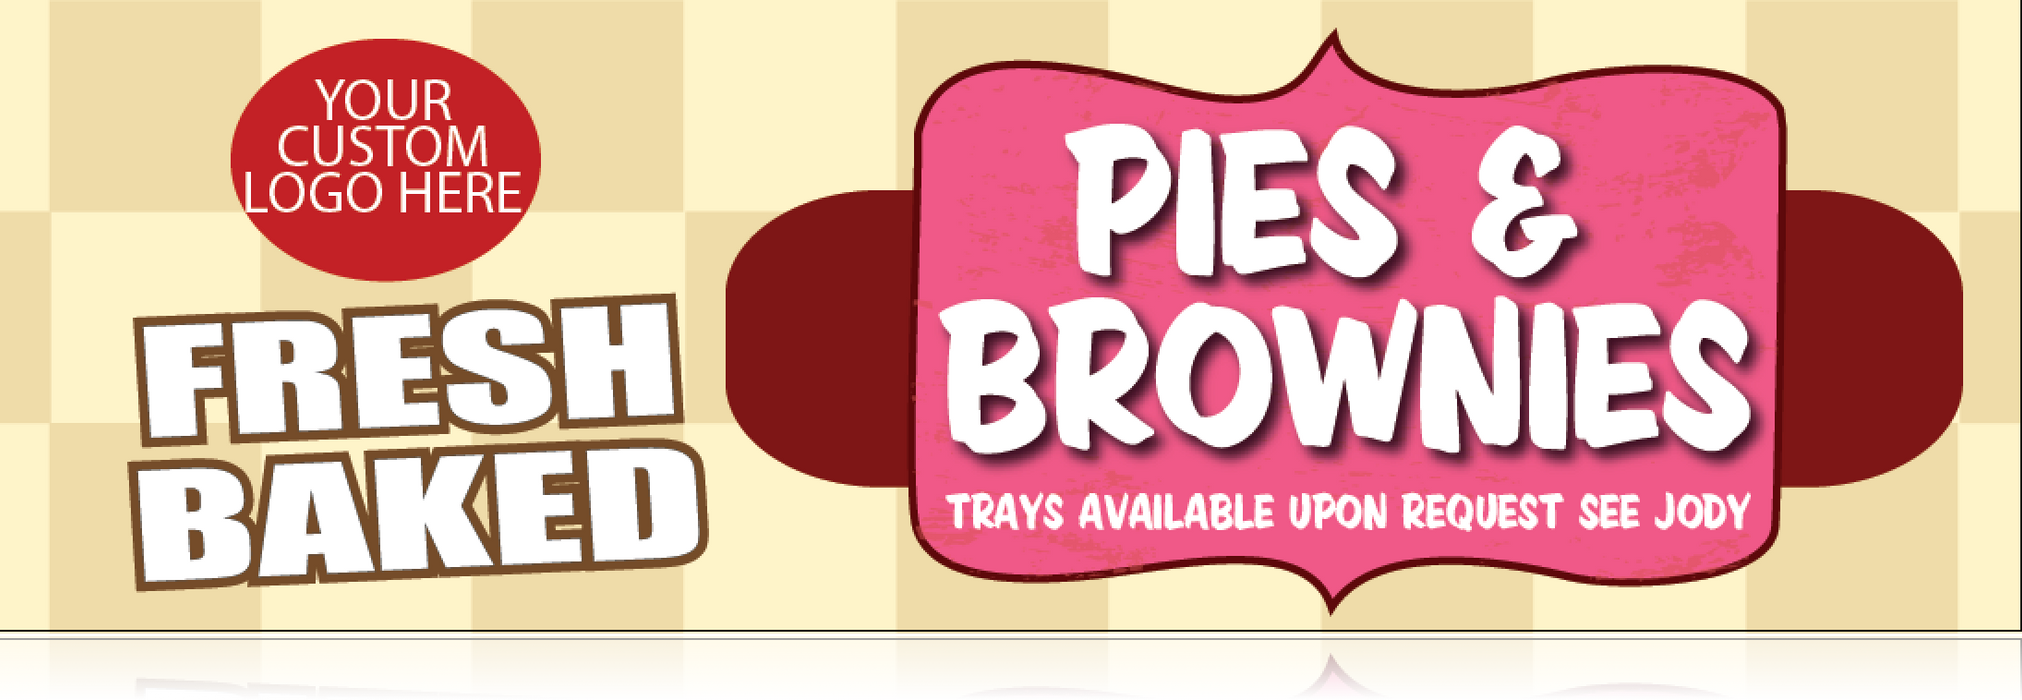 Pies & Brownies Countertop Easel Sign